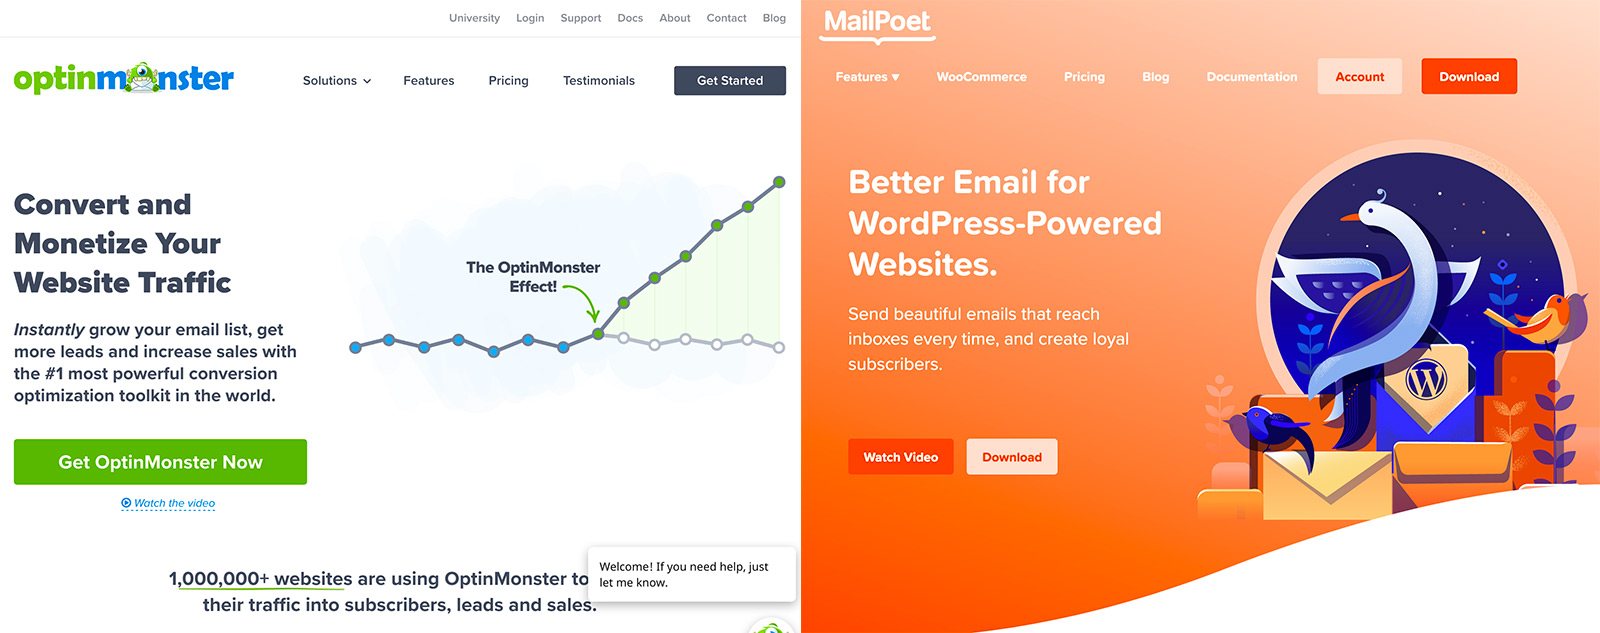 OptinMonster or MailPoet WordPress Plugins Compared